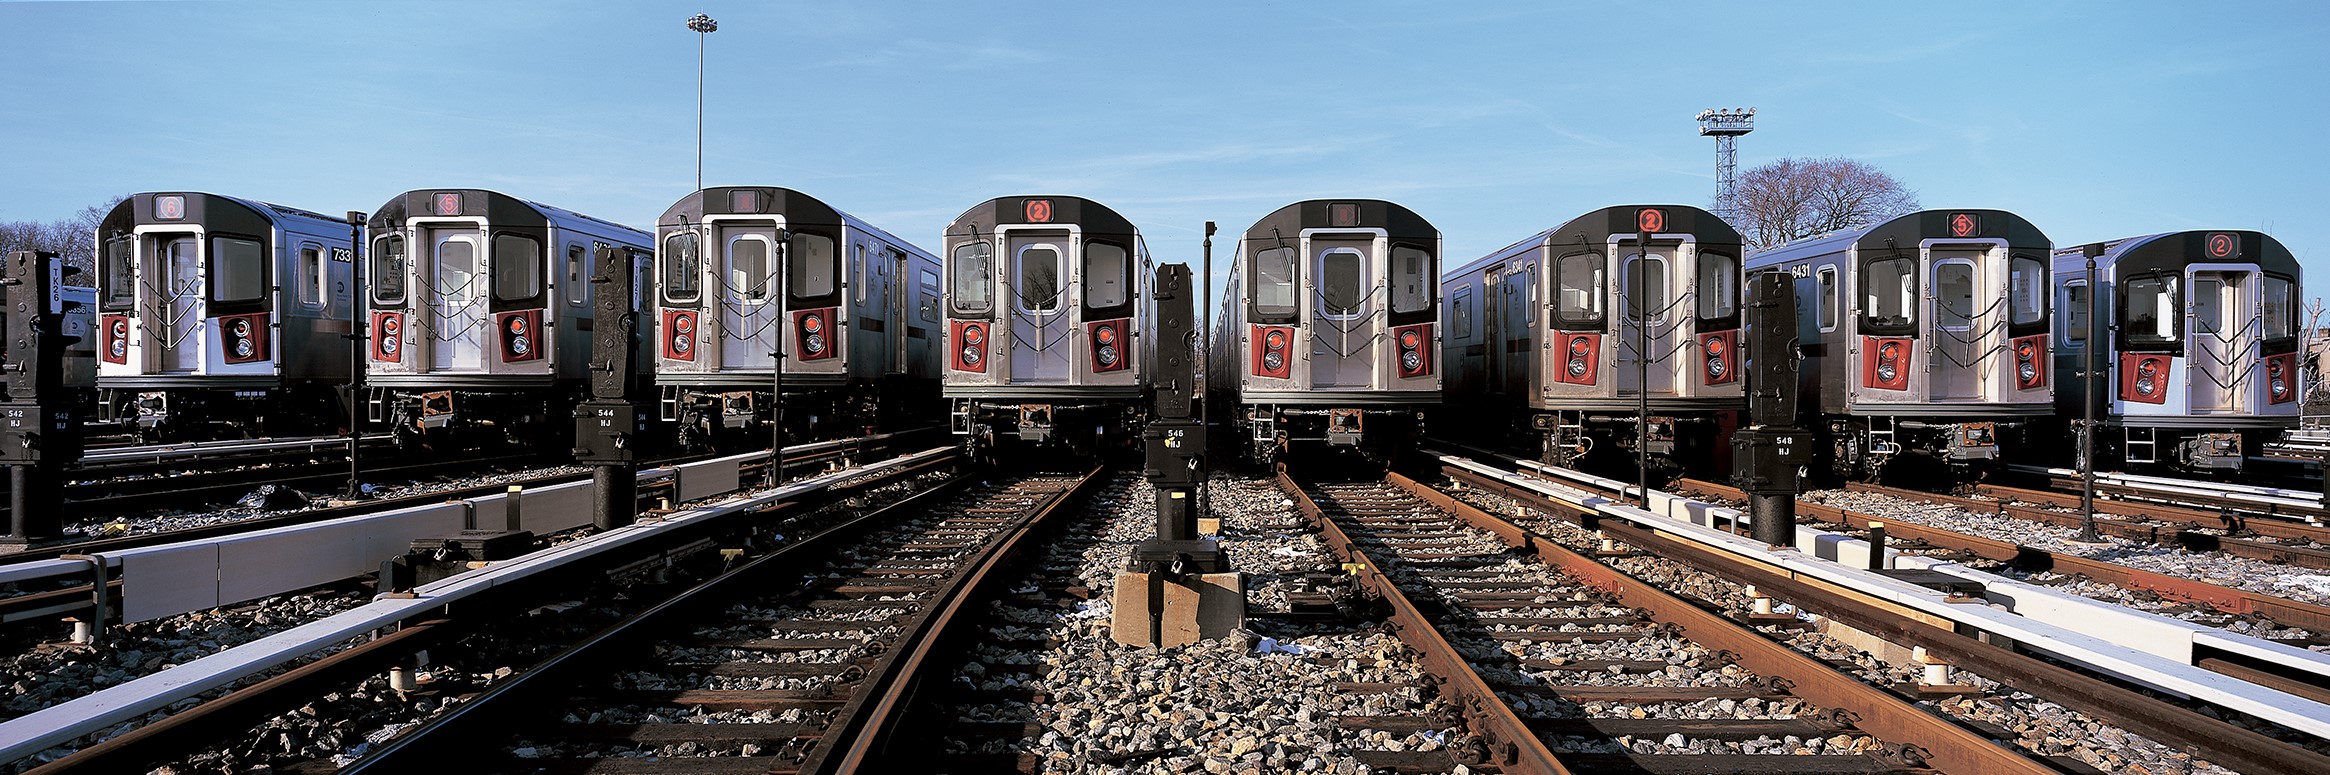 Line of subway cars in rail yard